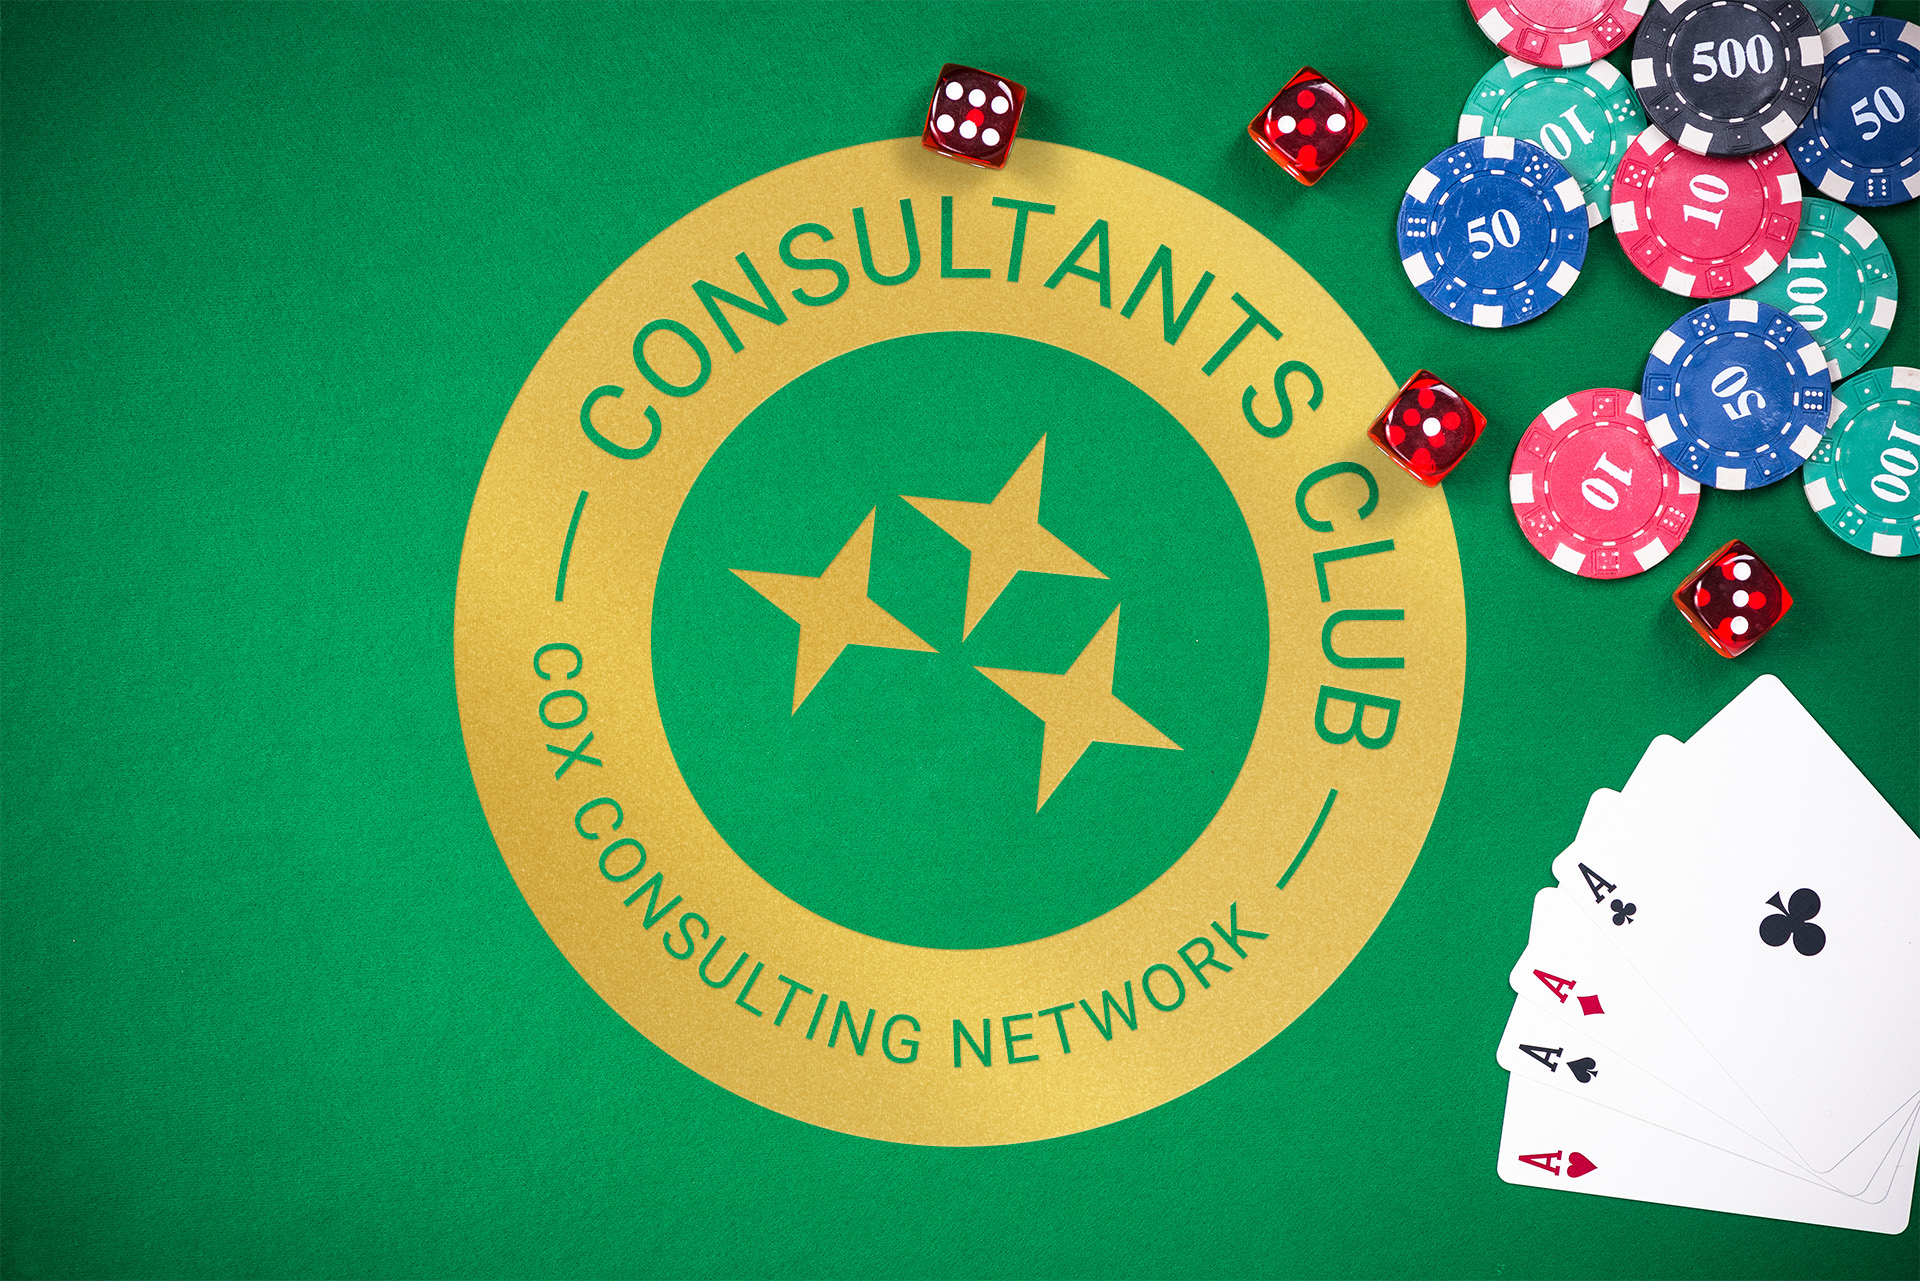 Consultants Club Logo Card Table